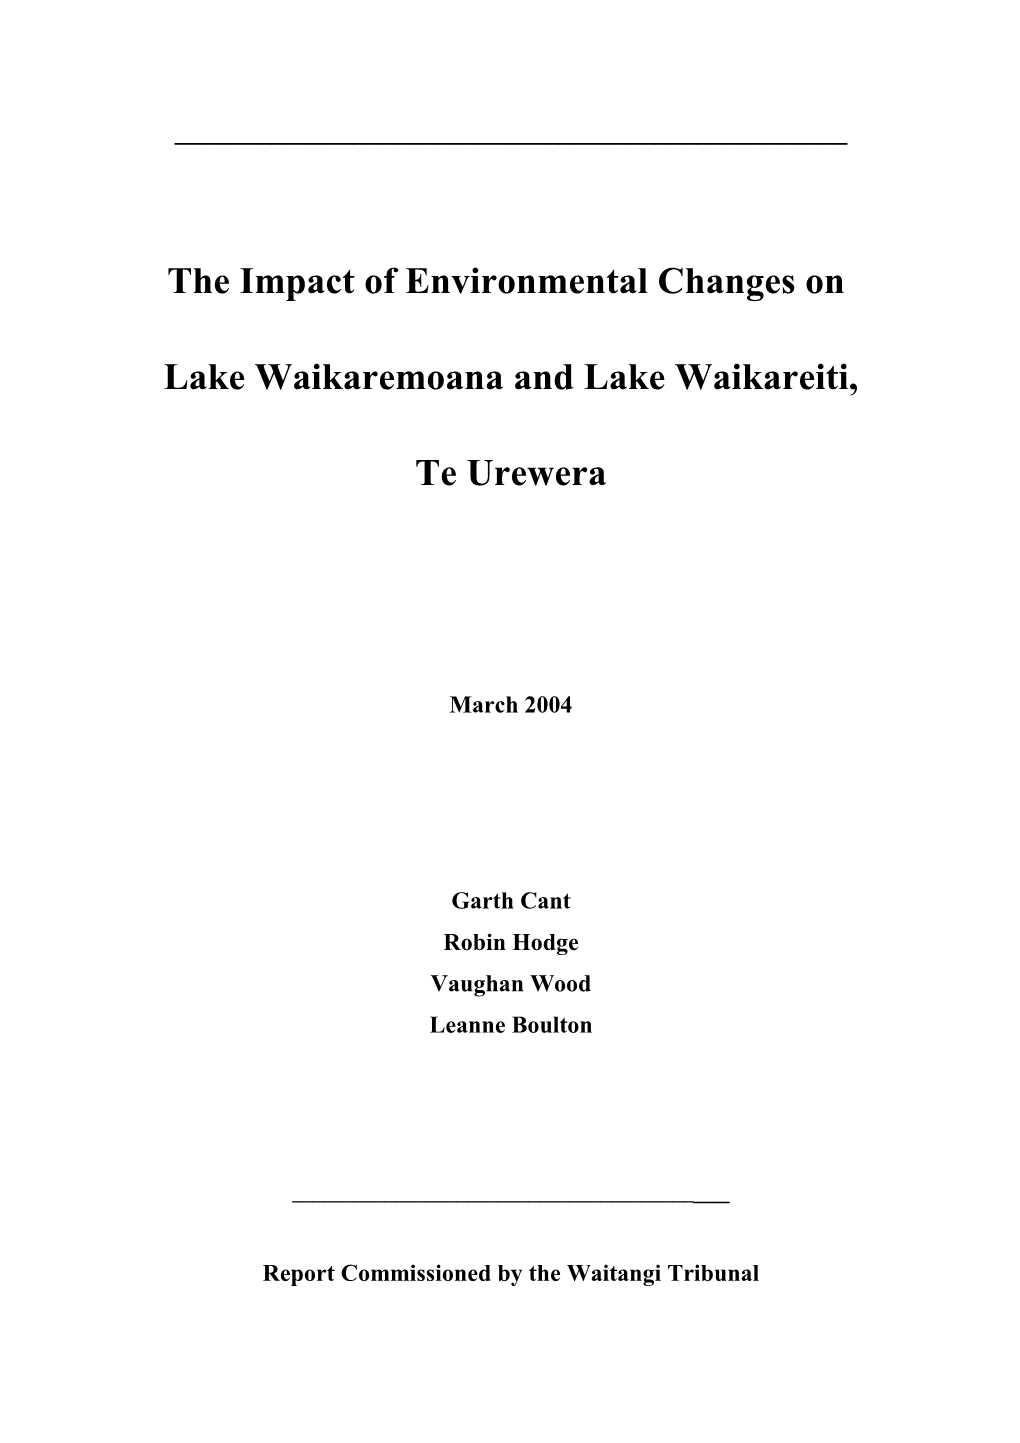 The Impact of Environmental Changes on Lake Waikaremoana and Lake